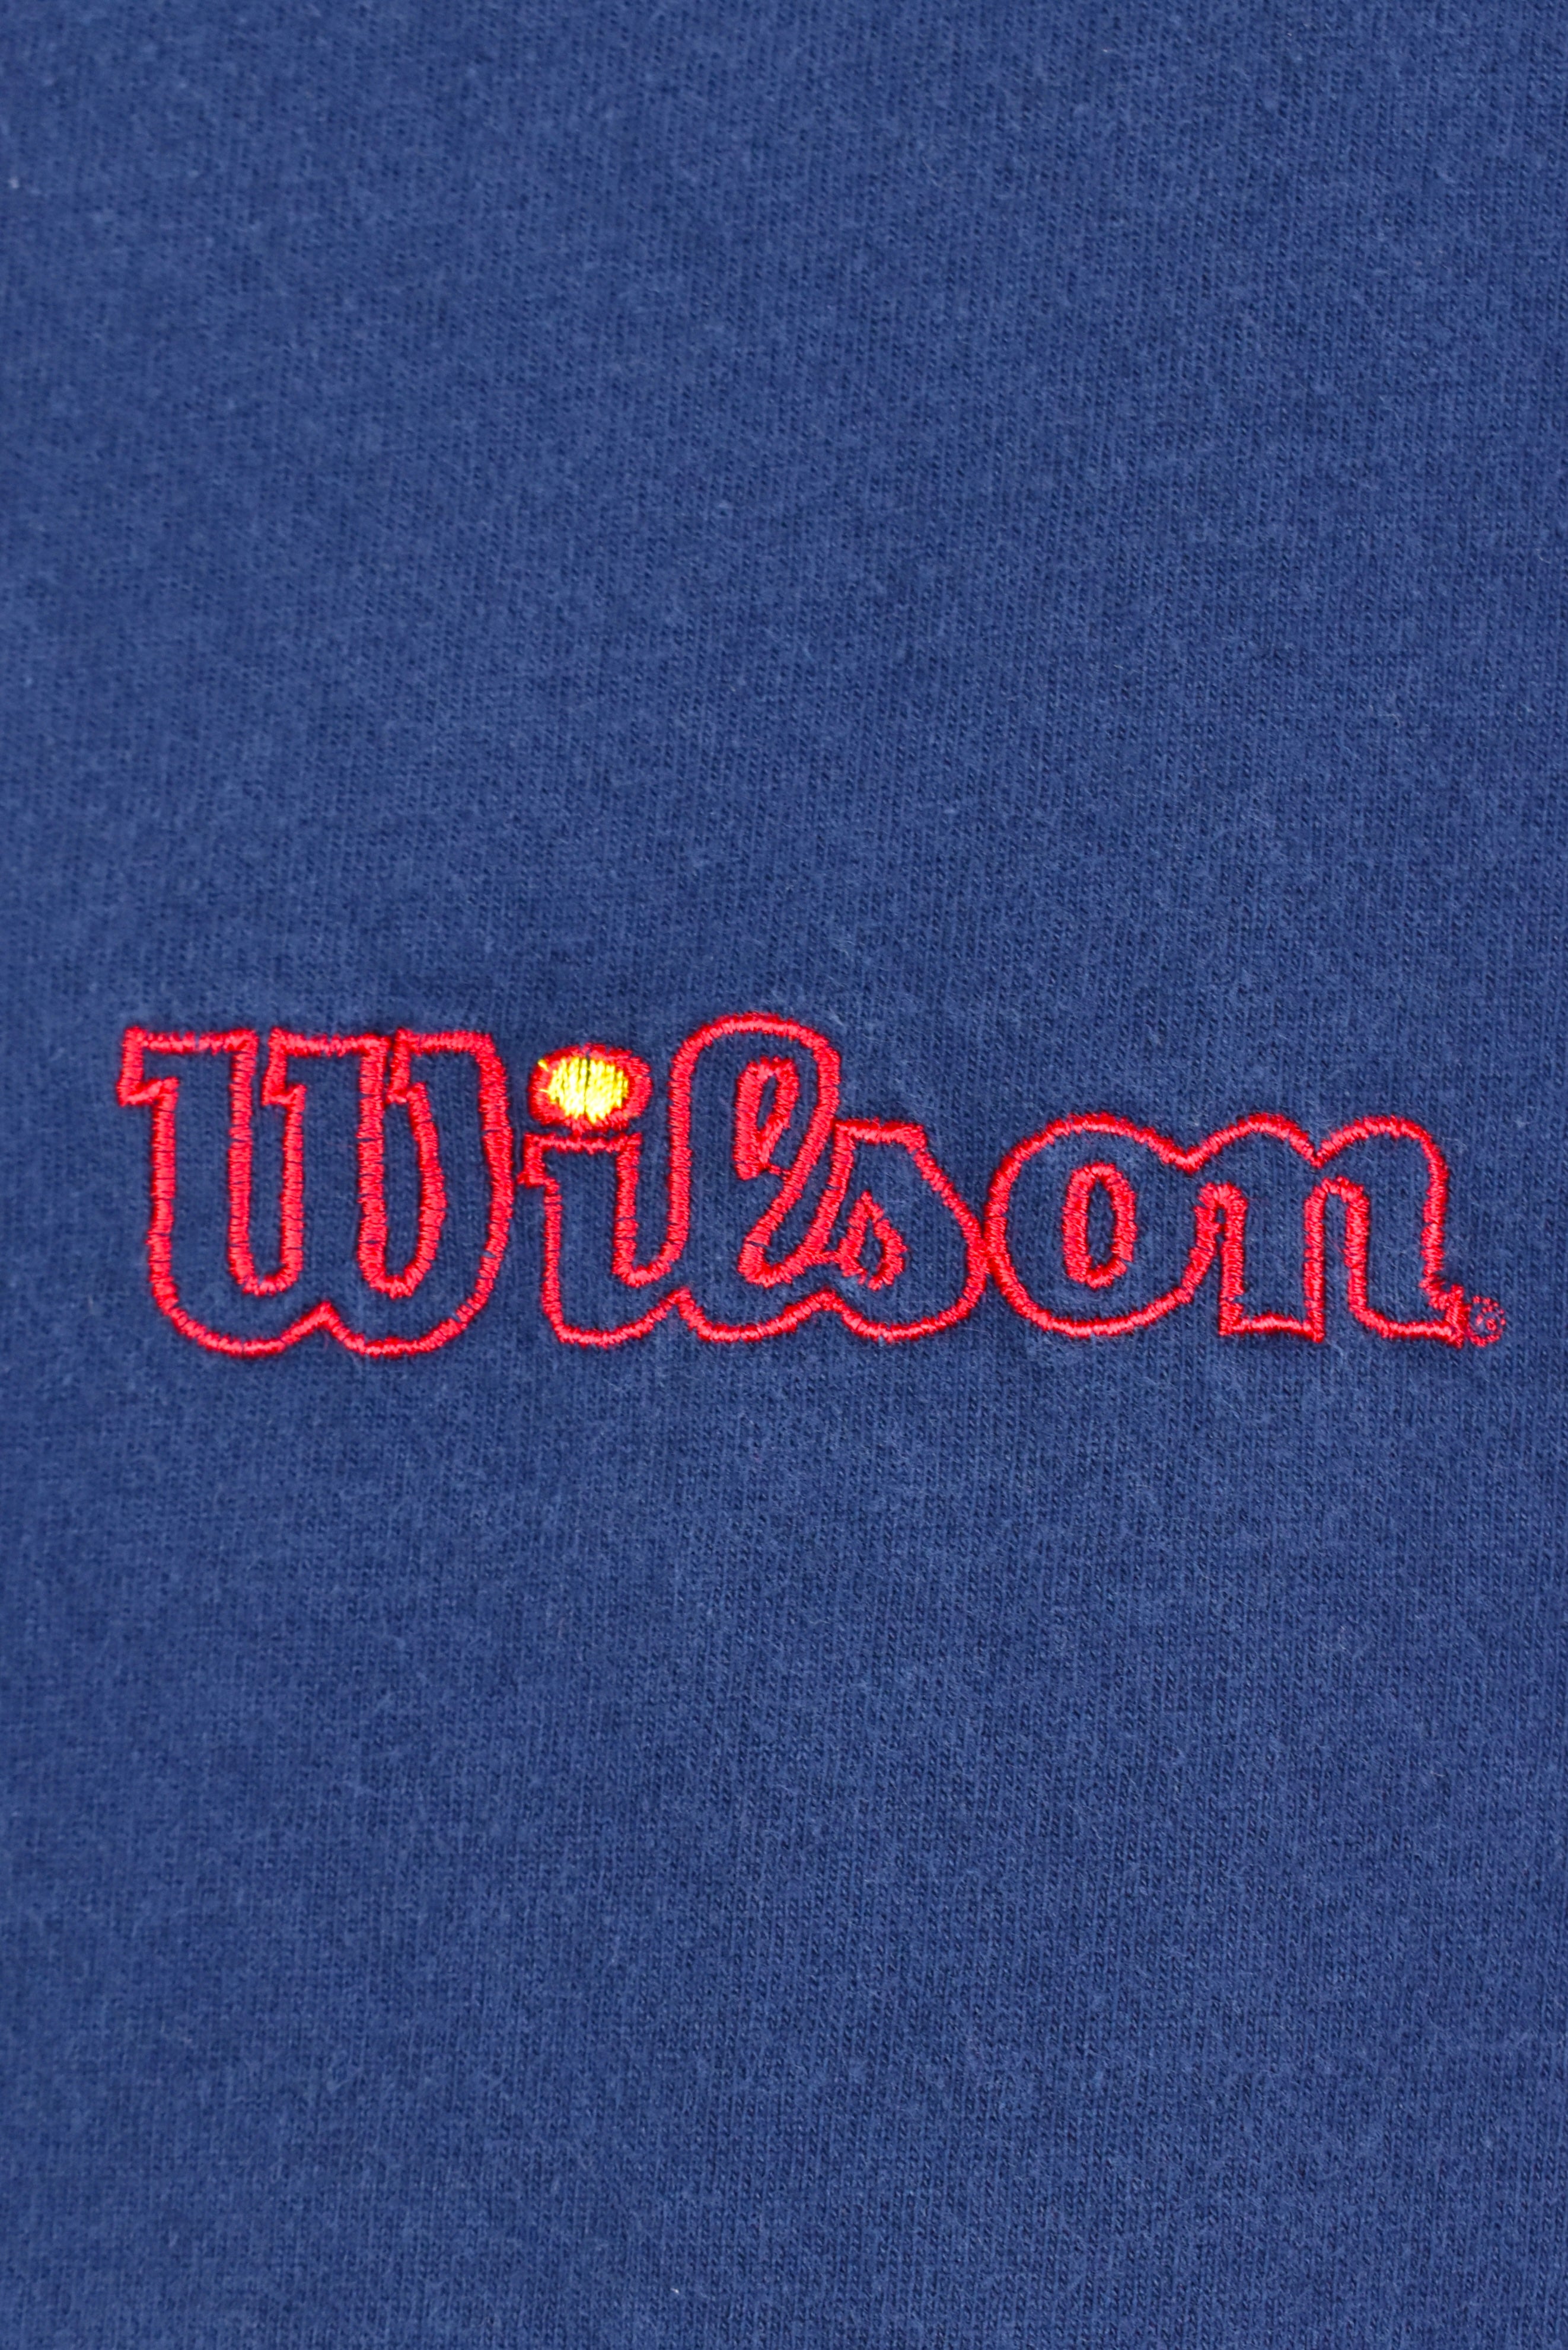 Vintage Wilson shirt, short sleeve embroidered tee - XXL, navy blue WILSON